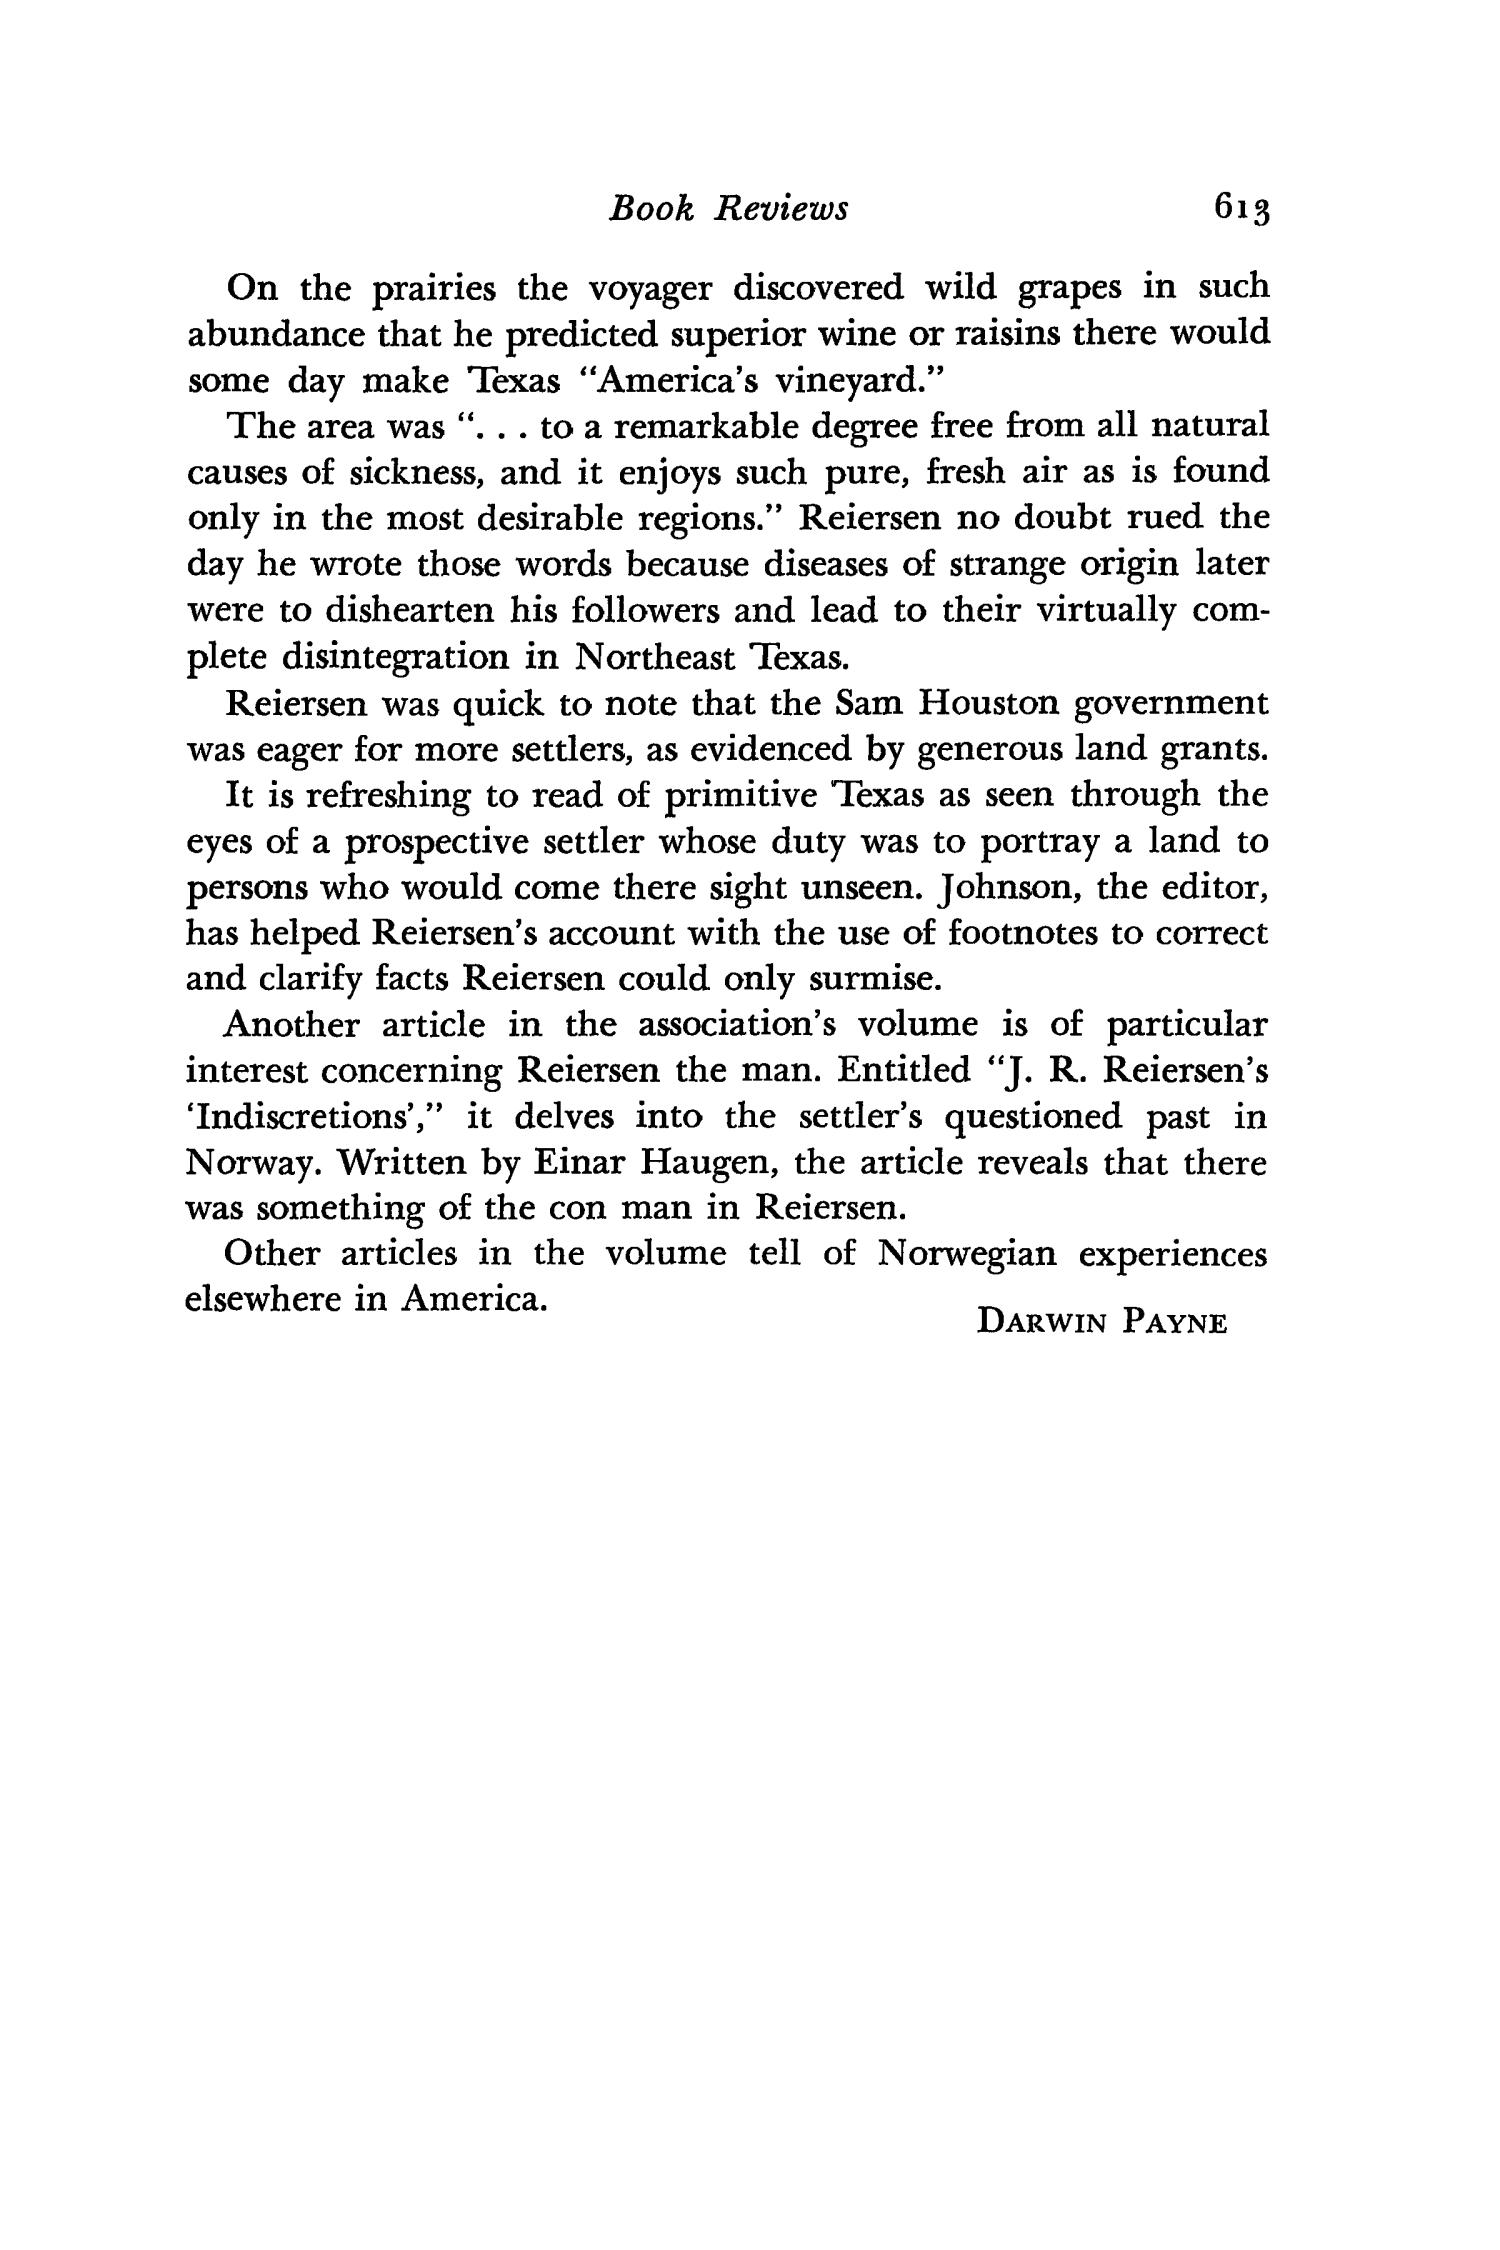 The Southwestern Historical Quarterly, Volume 66, July 1962 - April, 1963
                                                
                                                    613
                                                